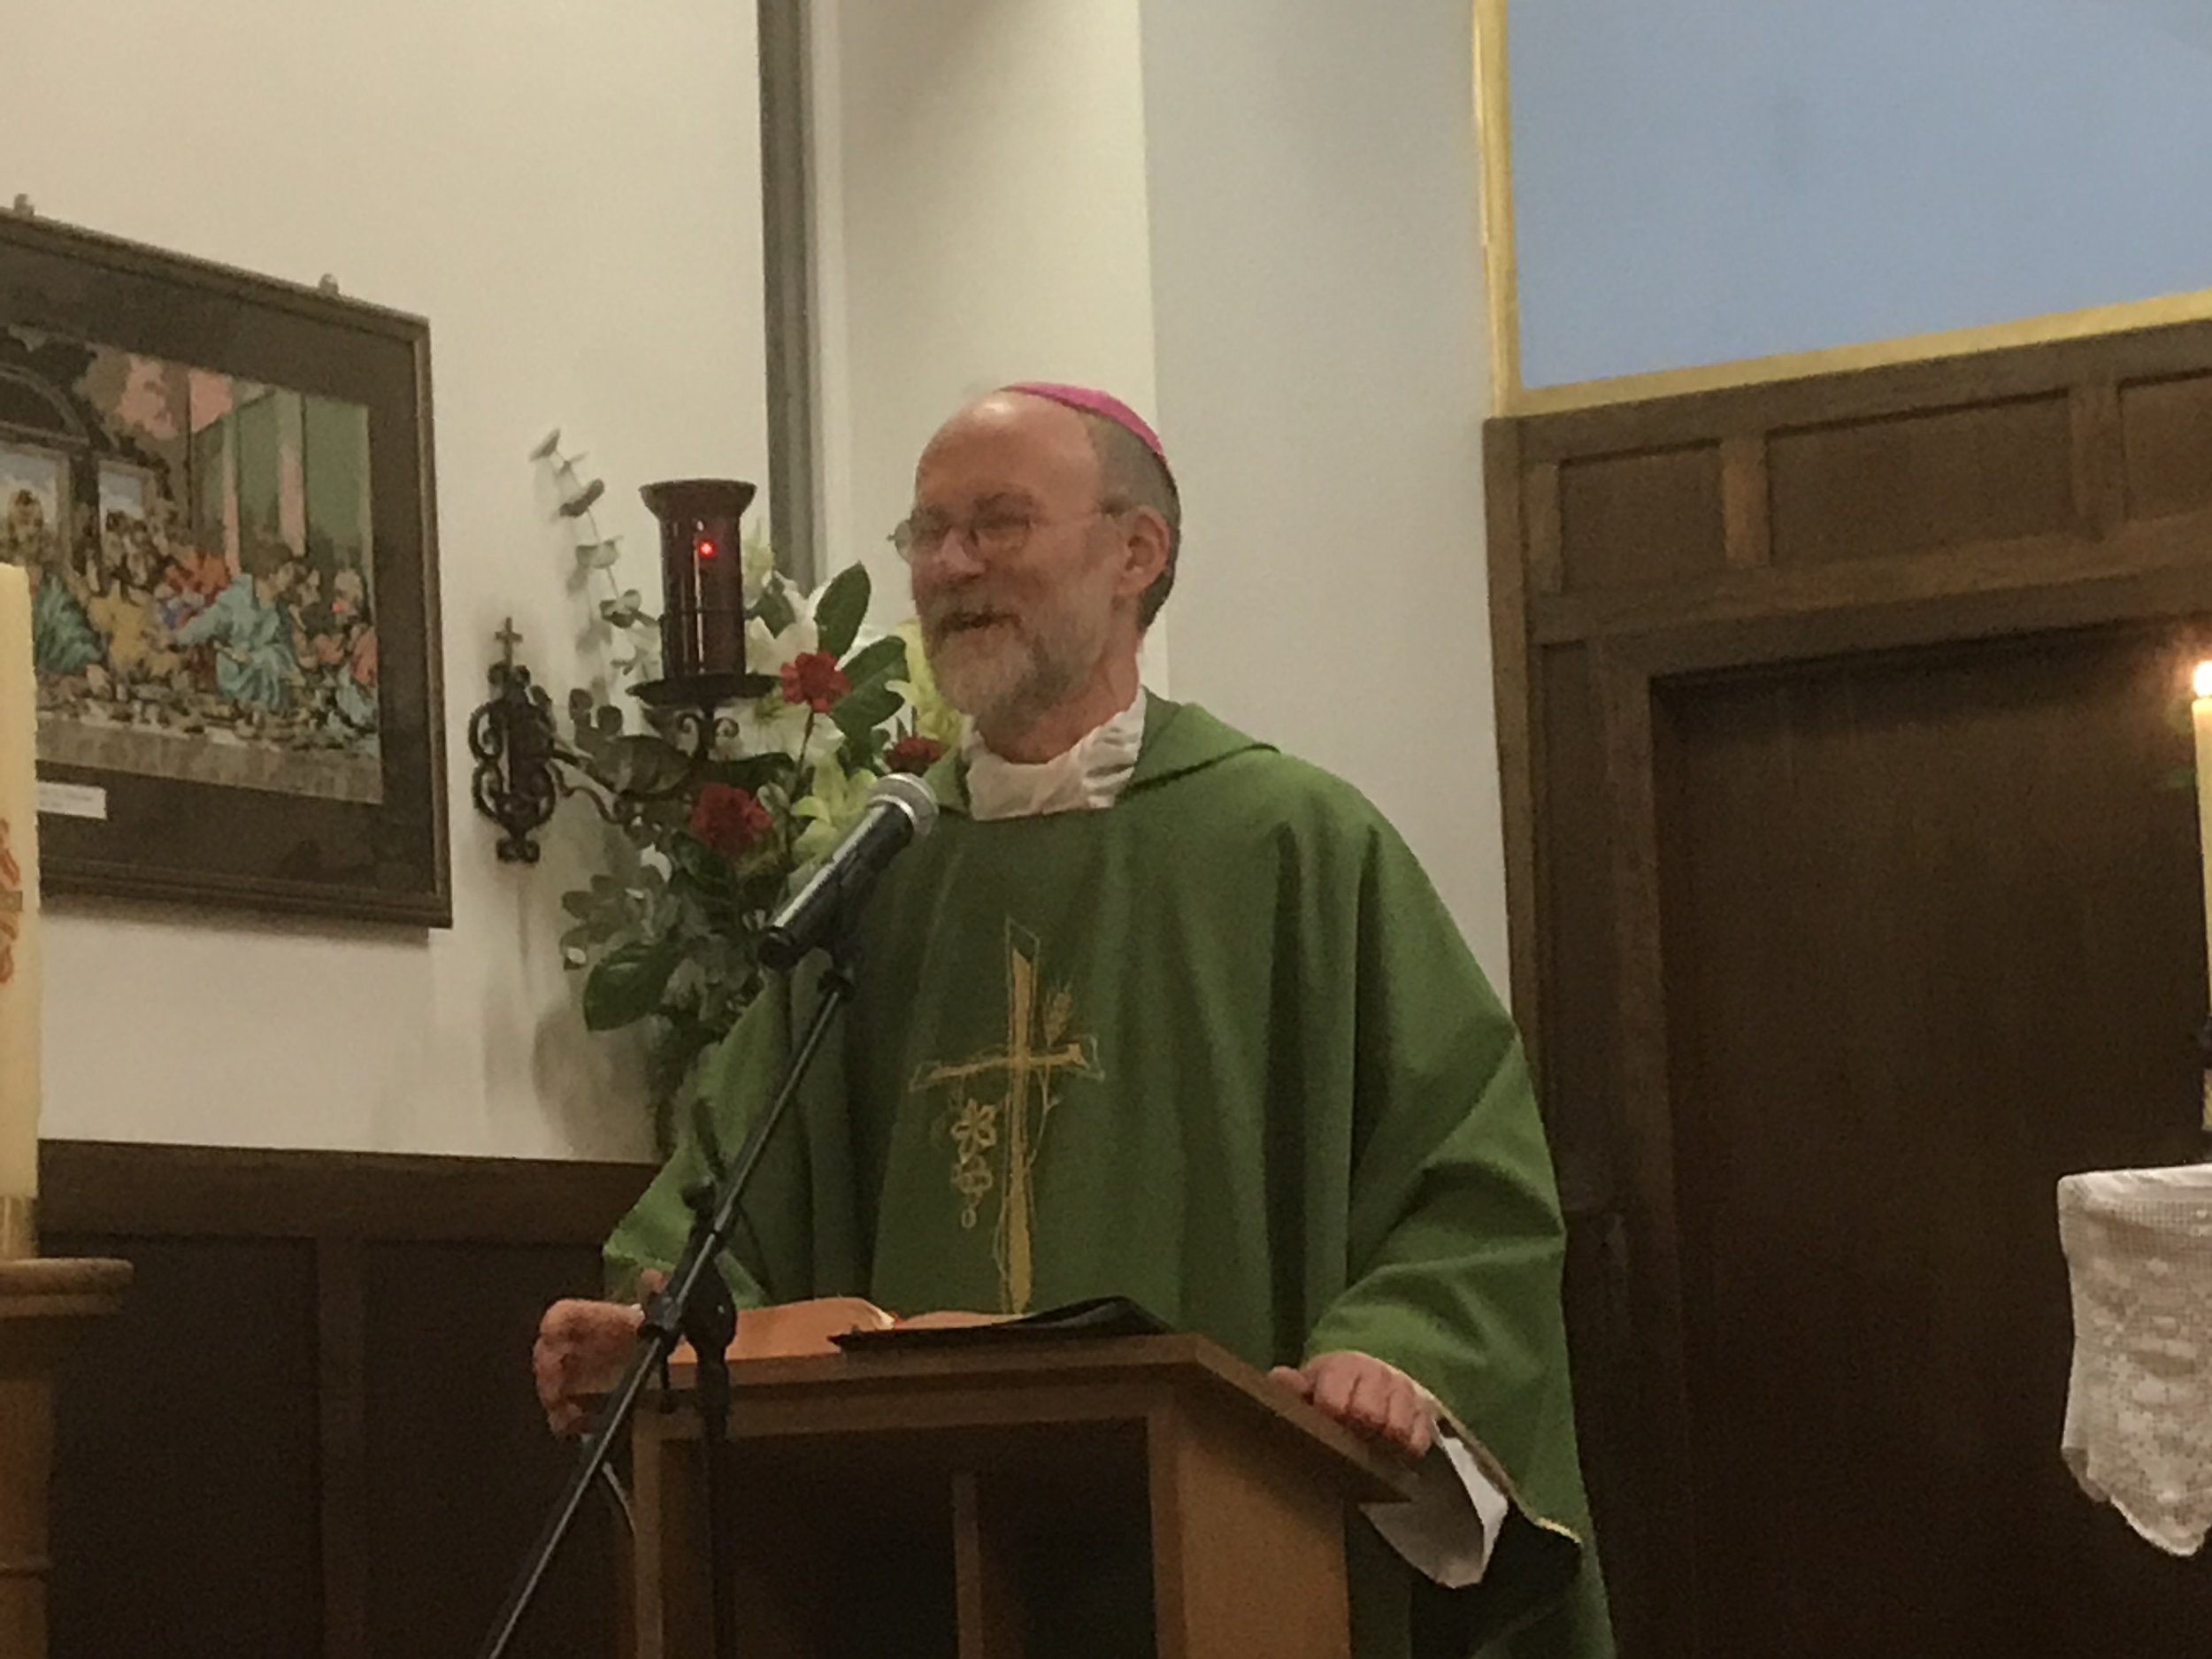 Bishop's visit to St Wulstan's 2019